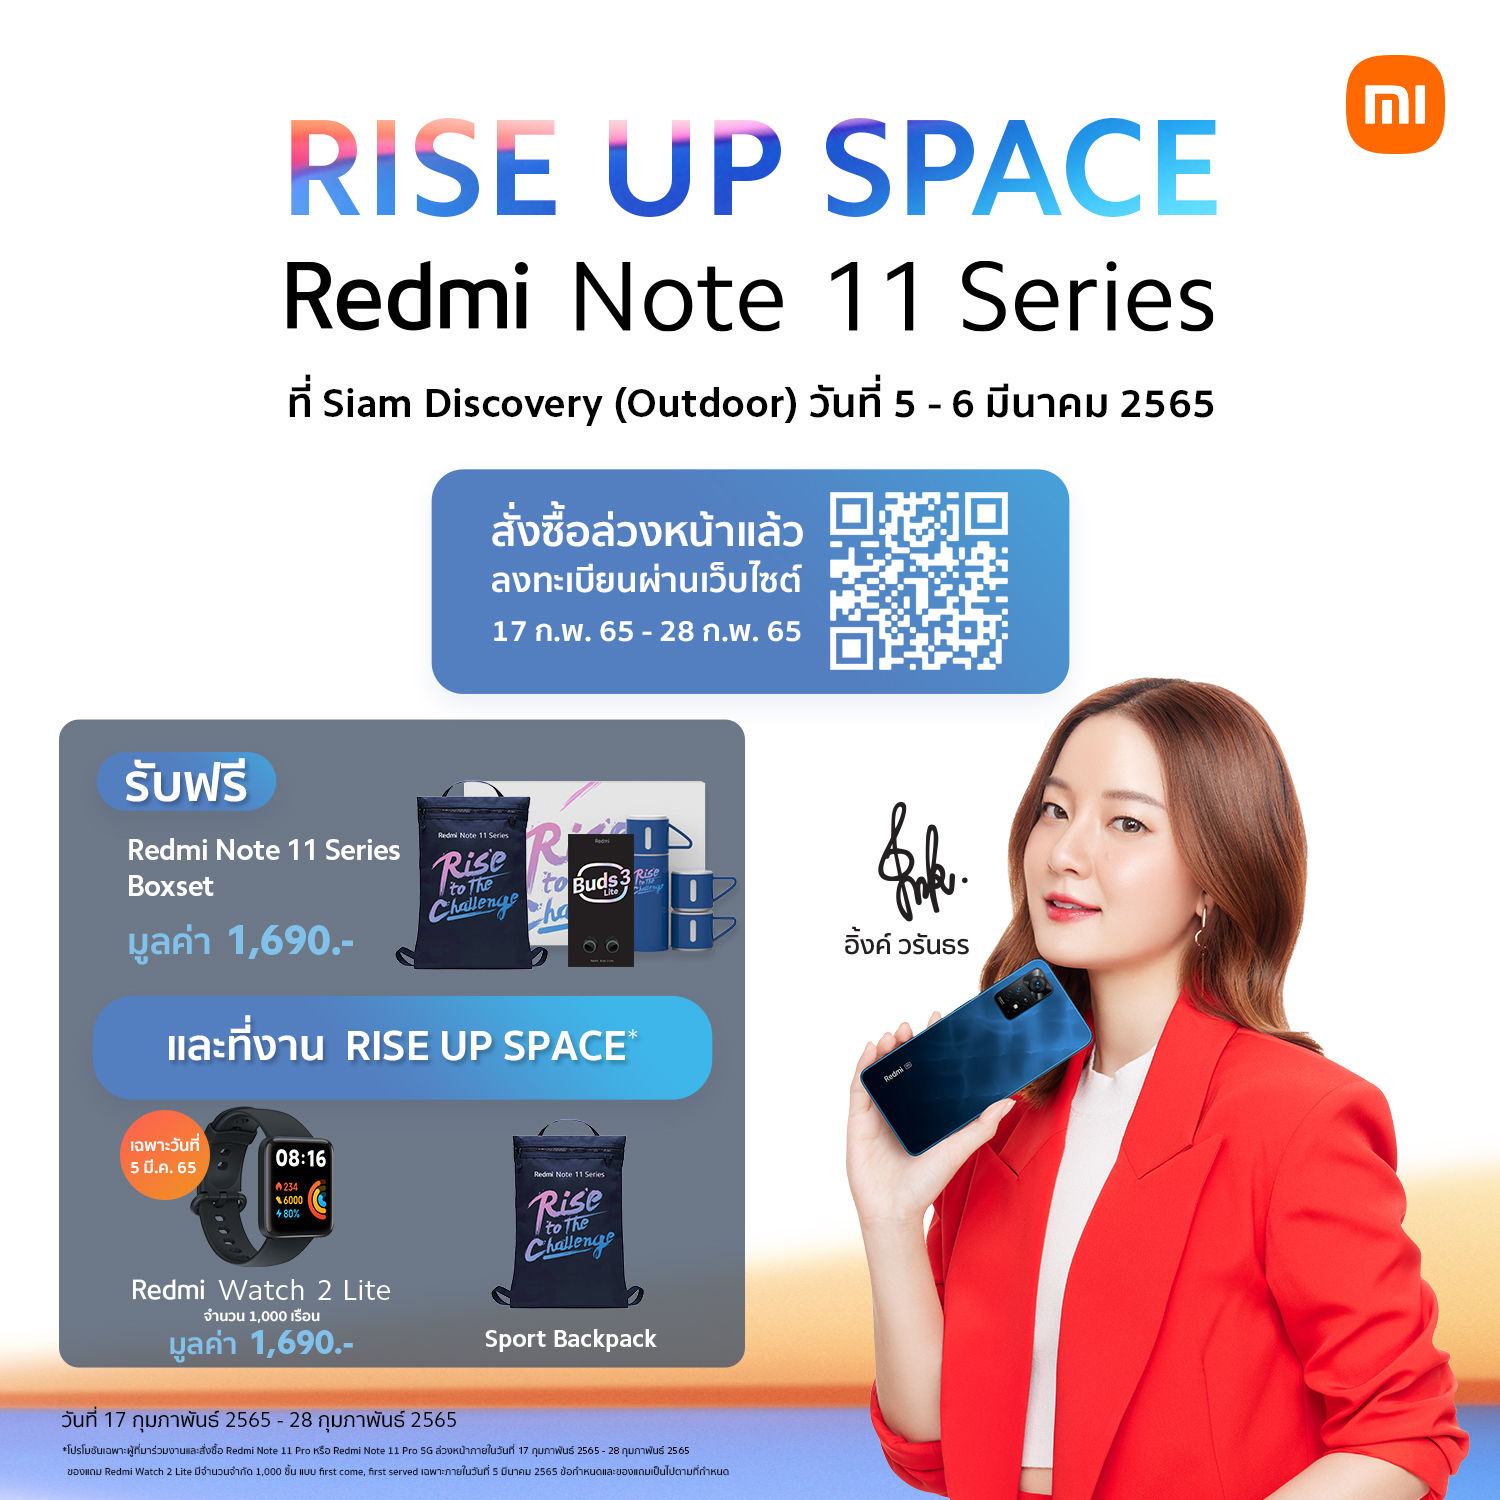 Redmi Note 11 Series